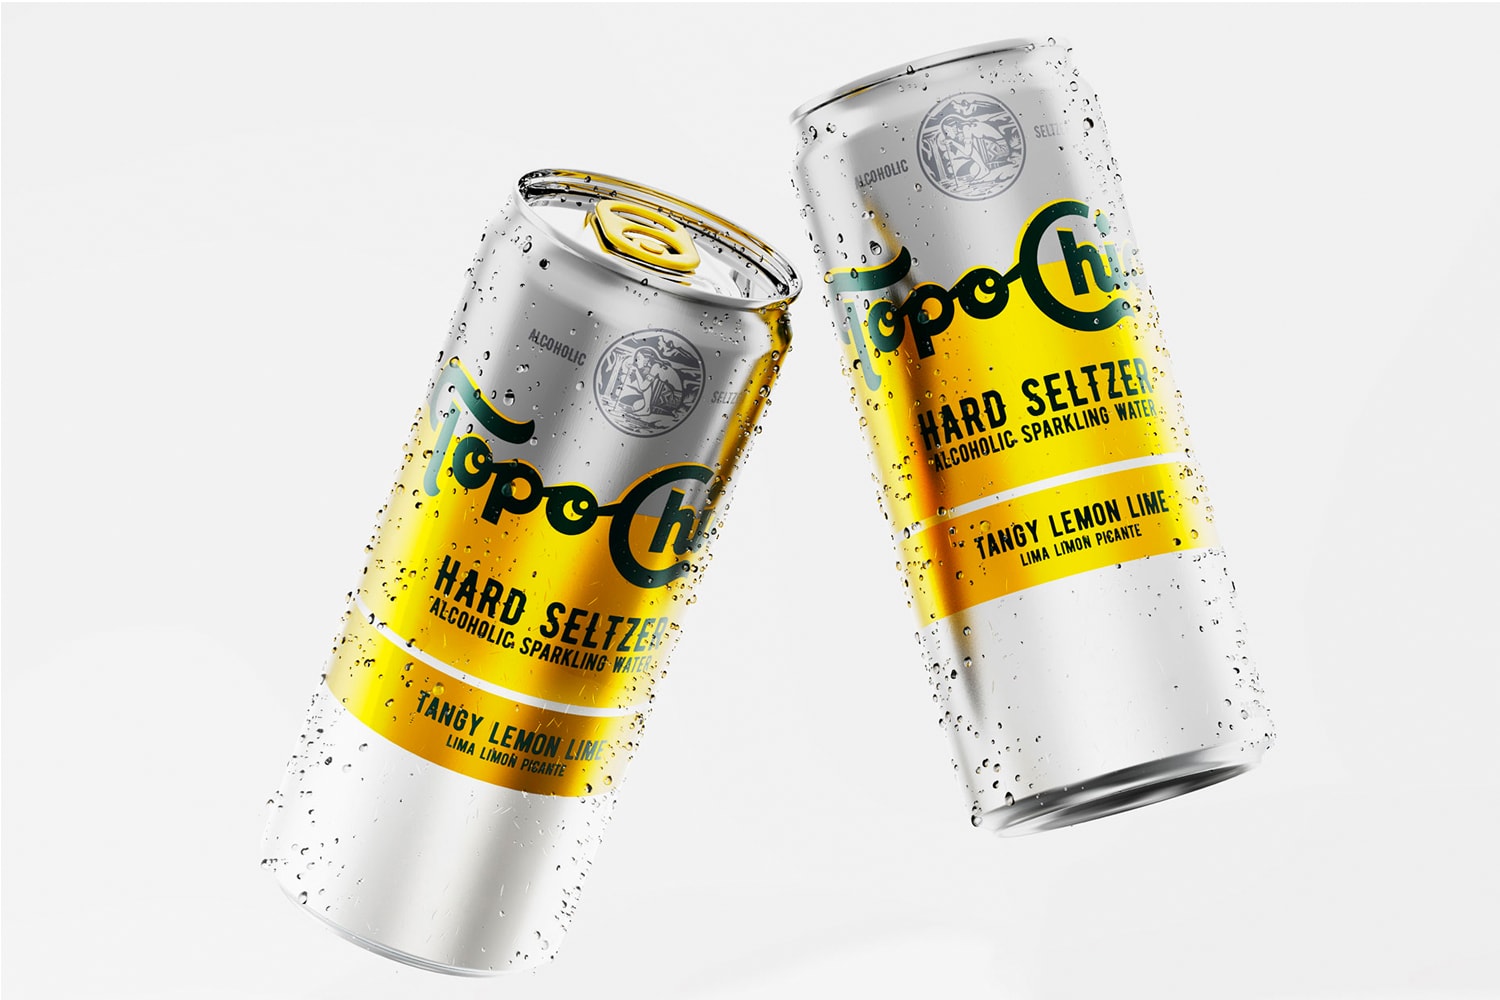 Coca-Cola Hard Seltzer Topo Chico Alcoholic Beverage Launch Info Release 